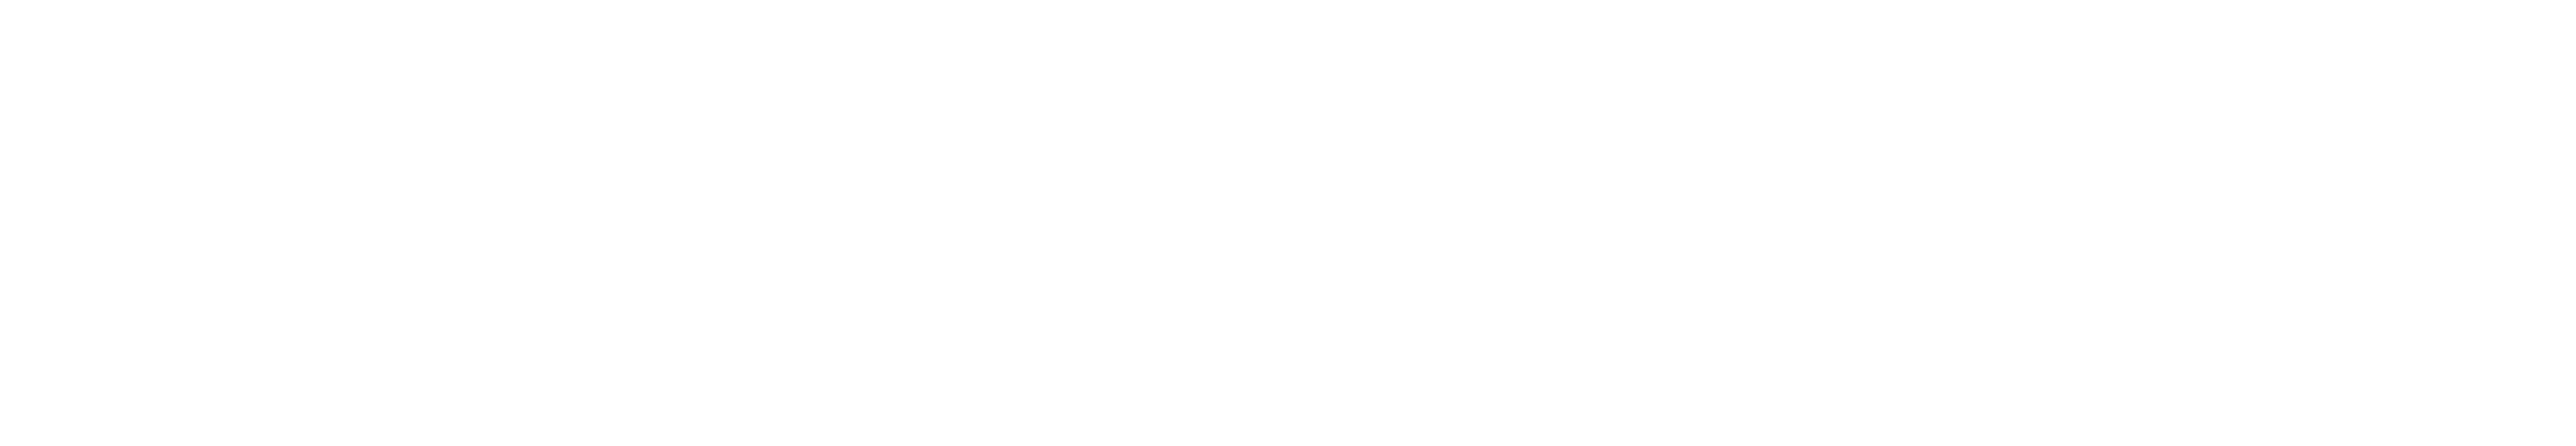 CreateMQA logo